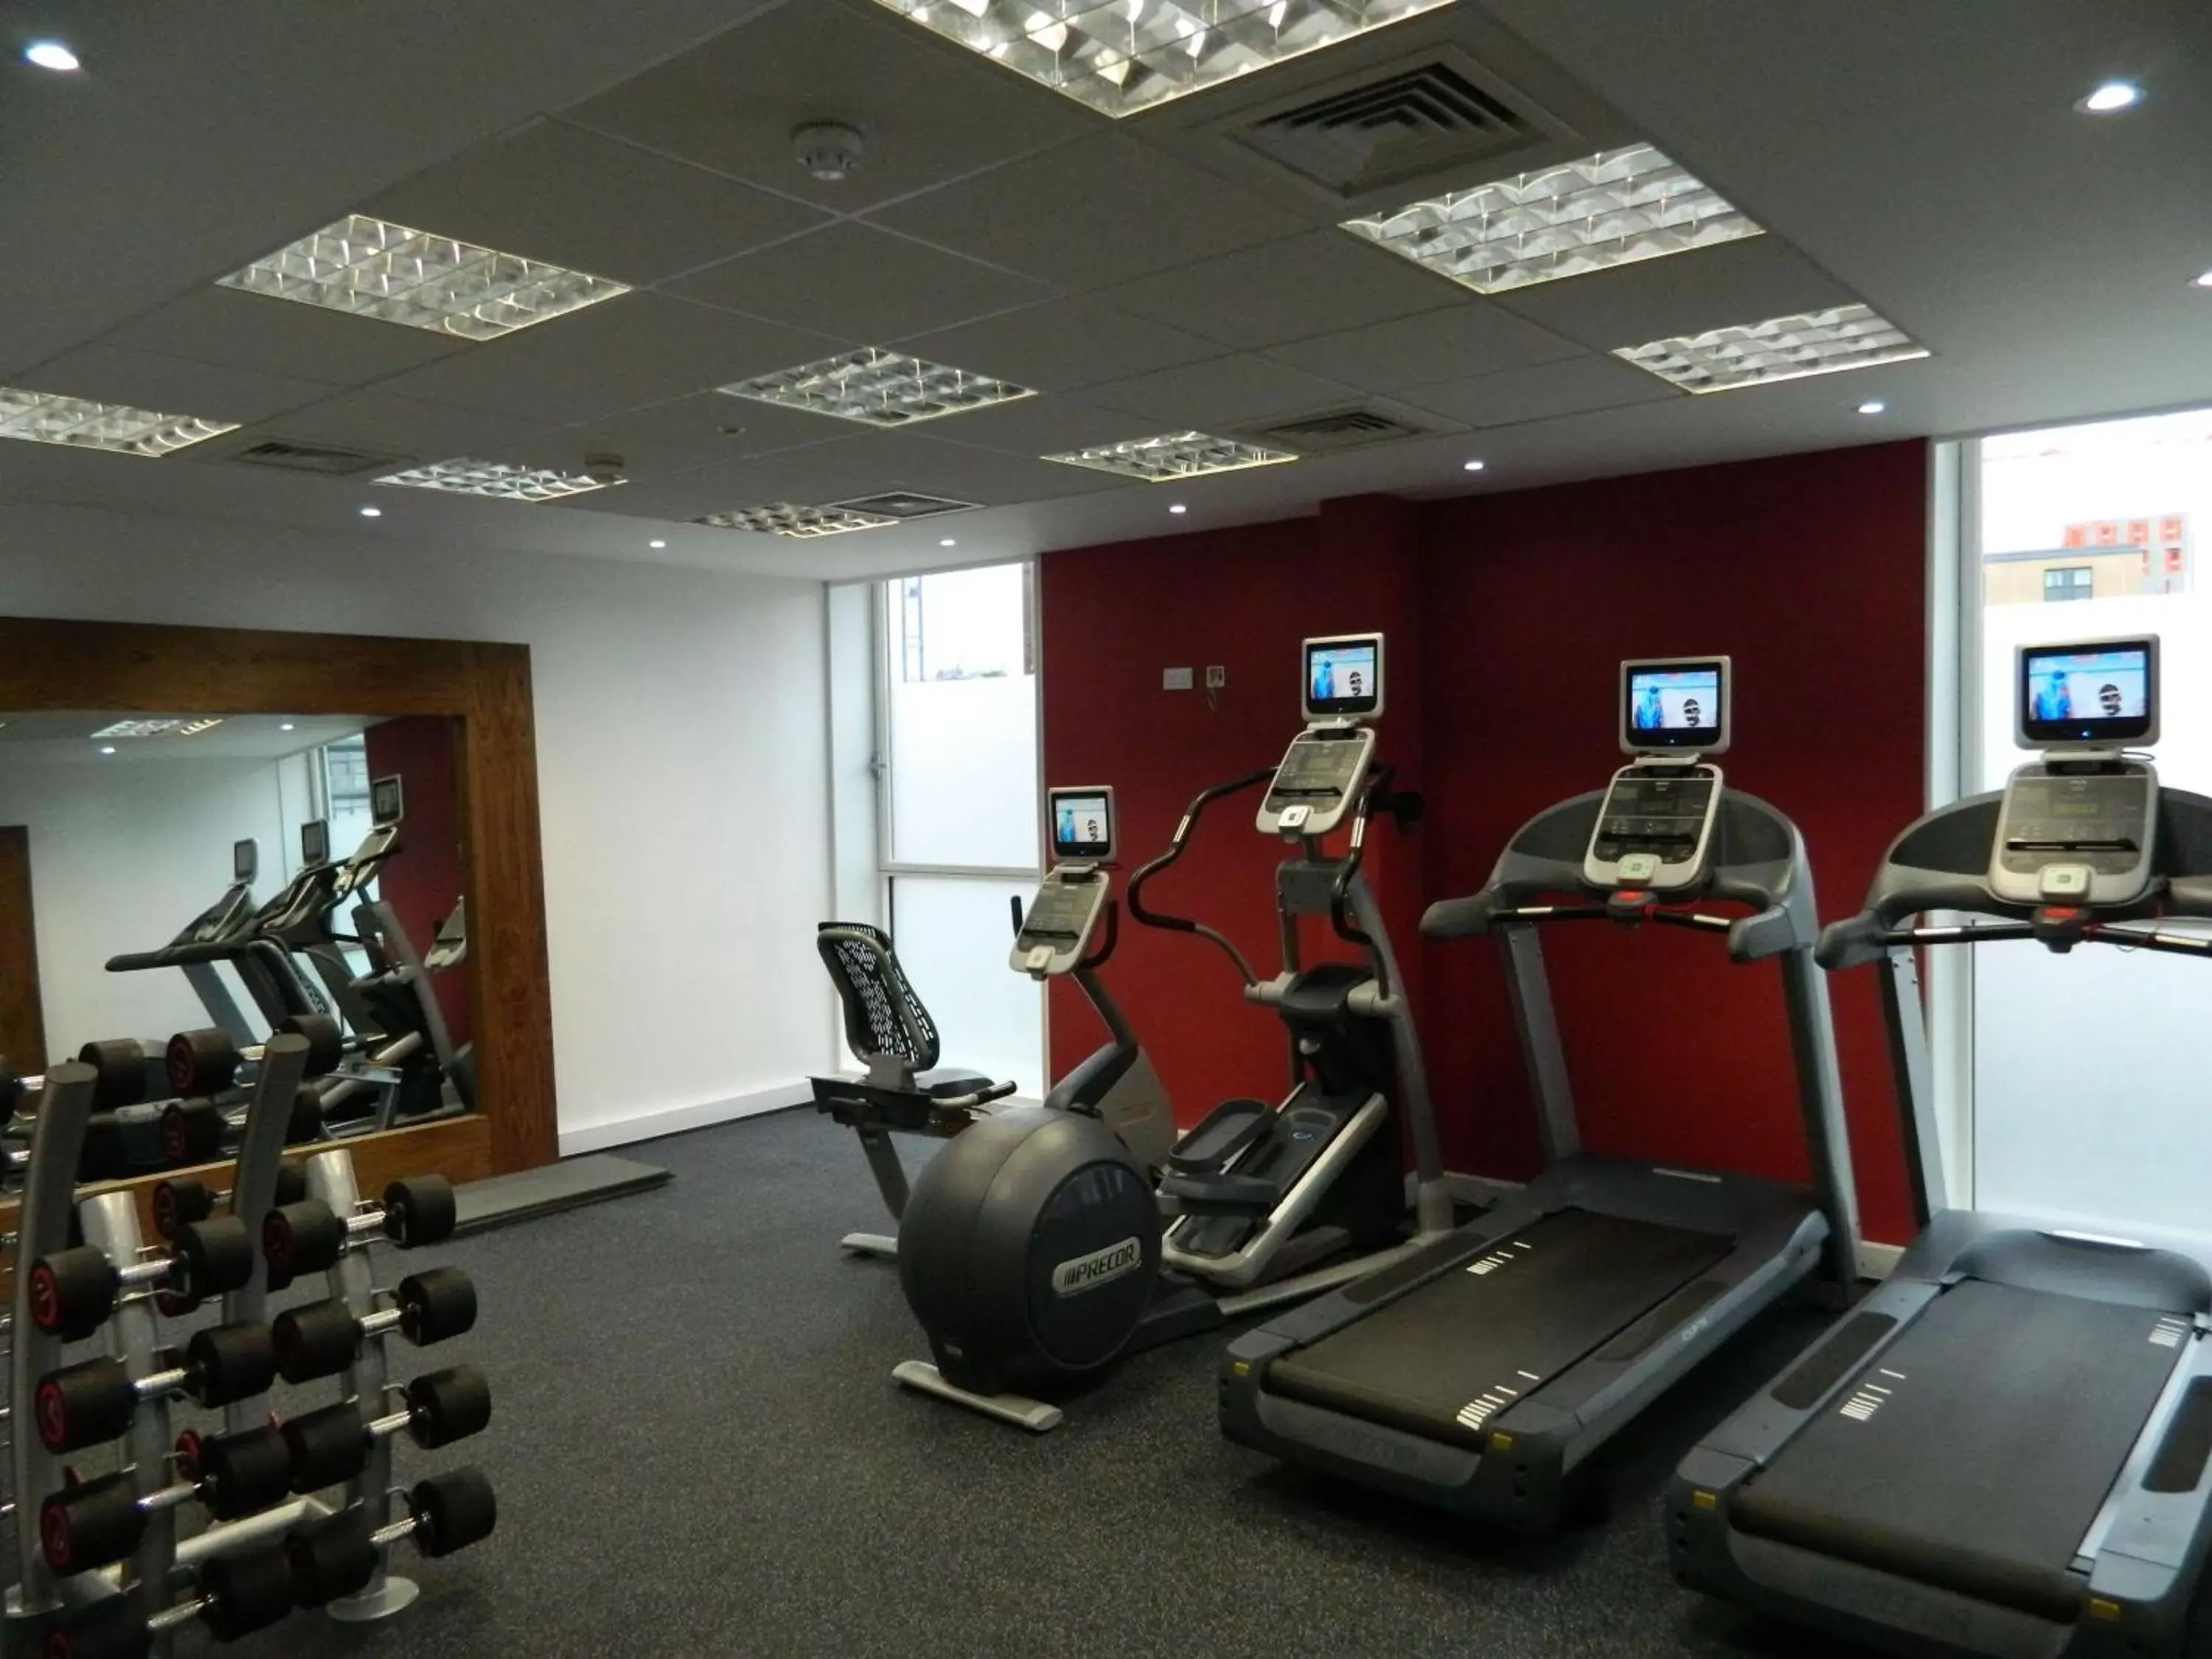 Fitness centre/facilities, Fitness Center/Facilities in Hilton Garden Inn Glasgow City Centre